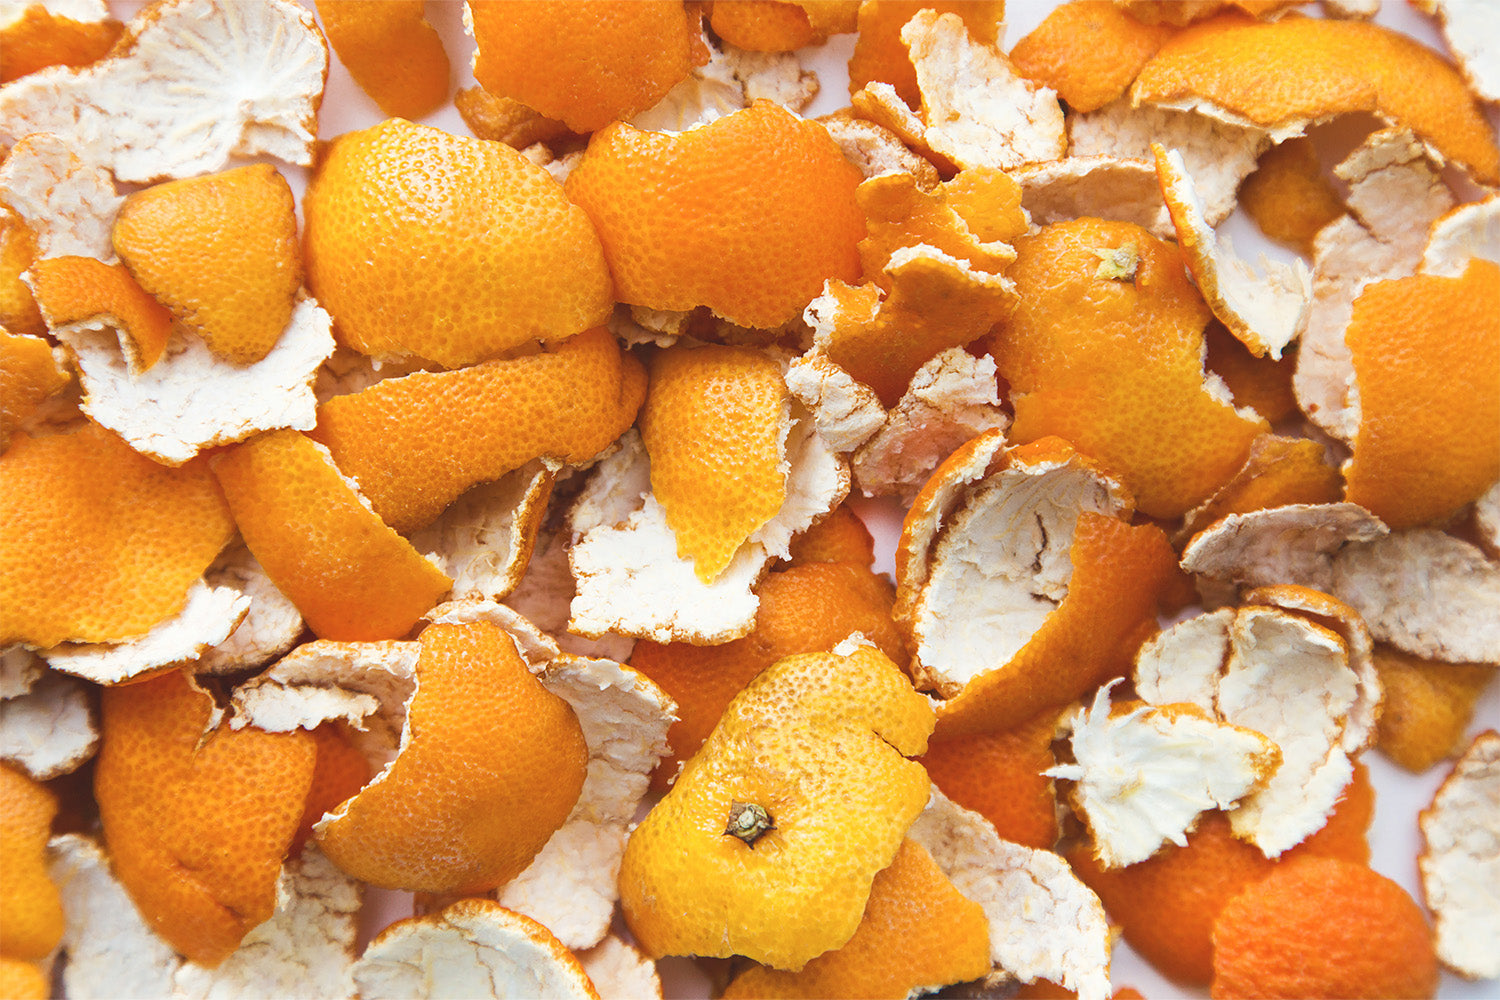 Can You Eat Orange Peels? Should You?